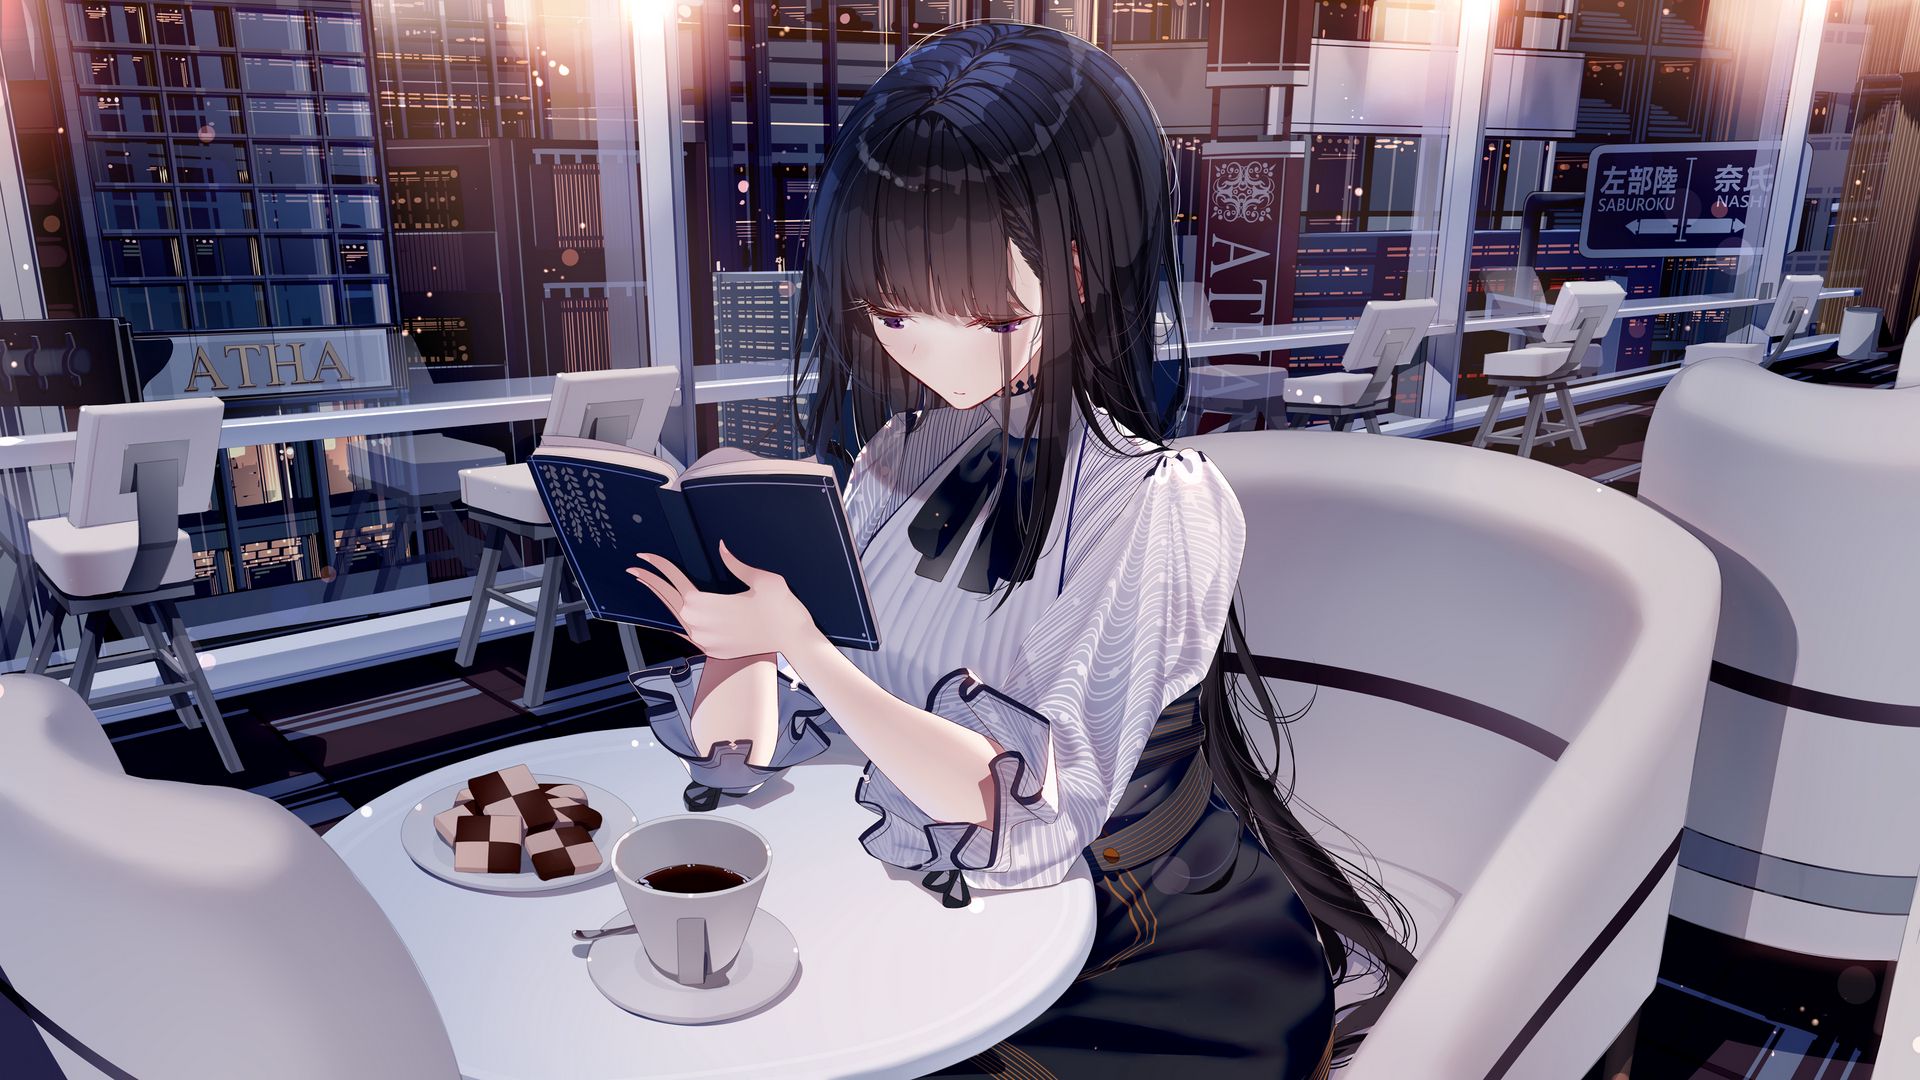 Download wallpaper 1920x1080 girl, book, coffee, restaurant, anime full hd, hdtv, fhd, 1080p HD background